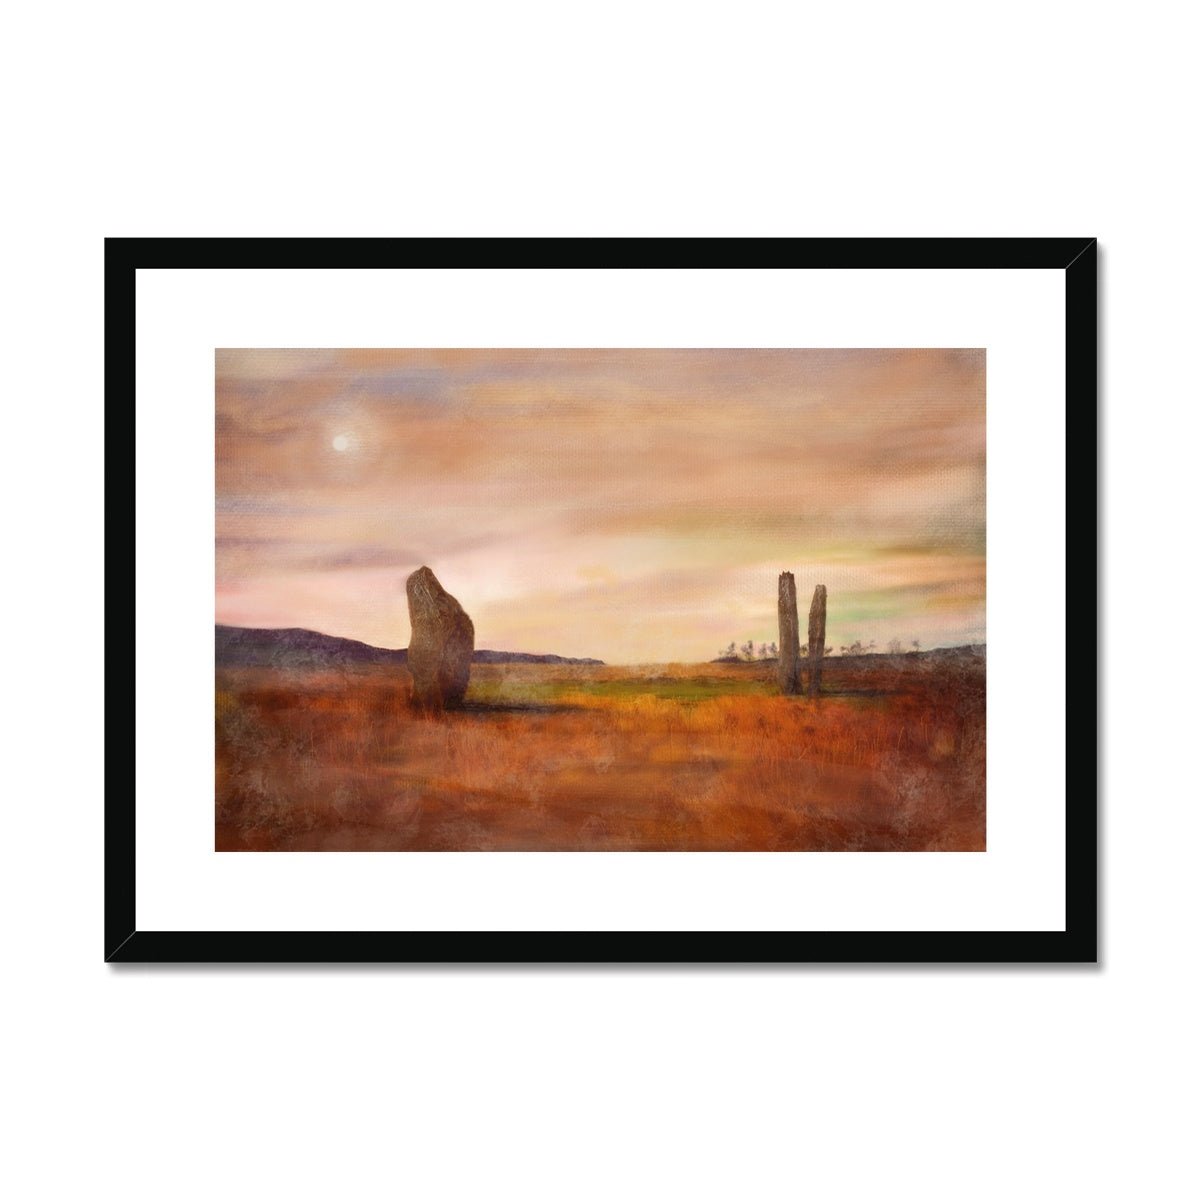 Machrie Moor Moonlight Painting | Framed & Mounted Prints From Scotland-Framed & Mounted Prints-Arran Art Gallery-A2 Landscape-Black Frame-Paintings, Prints, Homeware, Art Gifts From Scotland By Scottish Artist Kevin Hunter